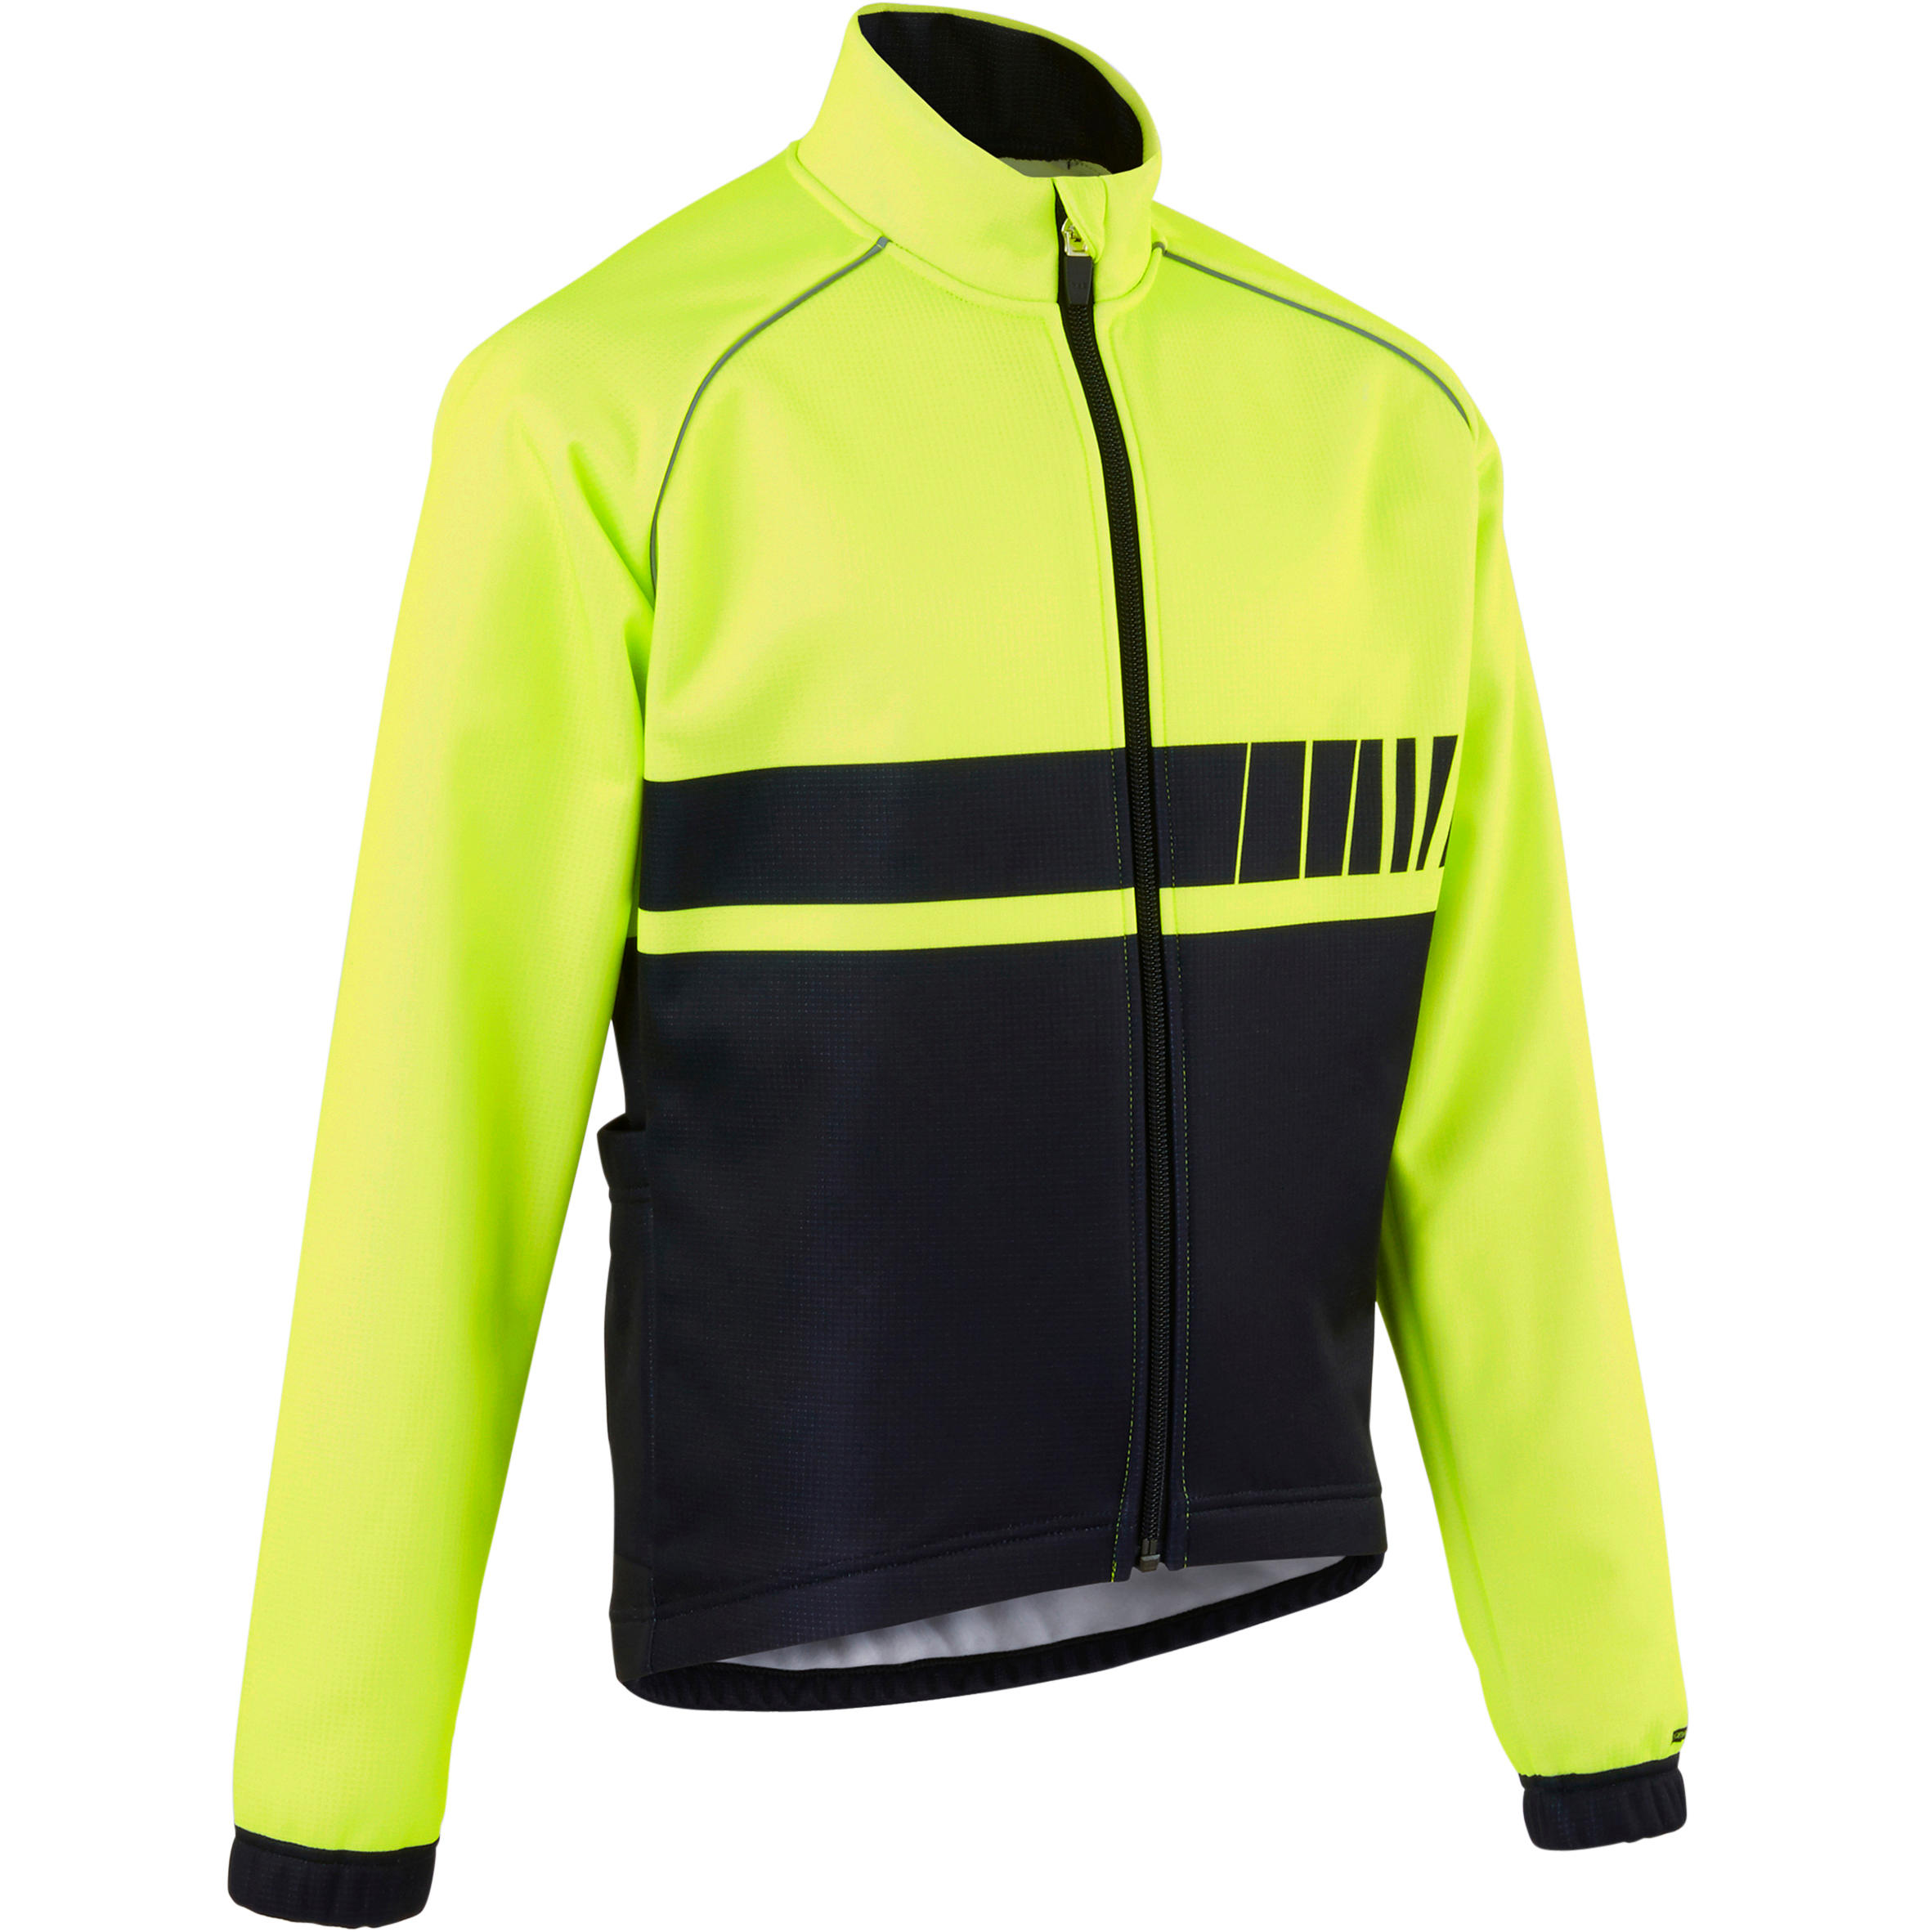 decathlon waterproof cycling jacket